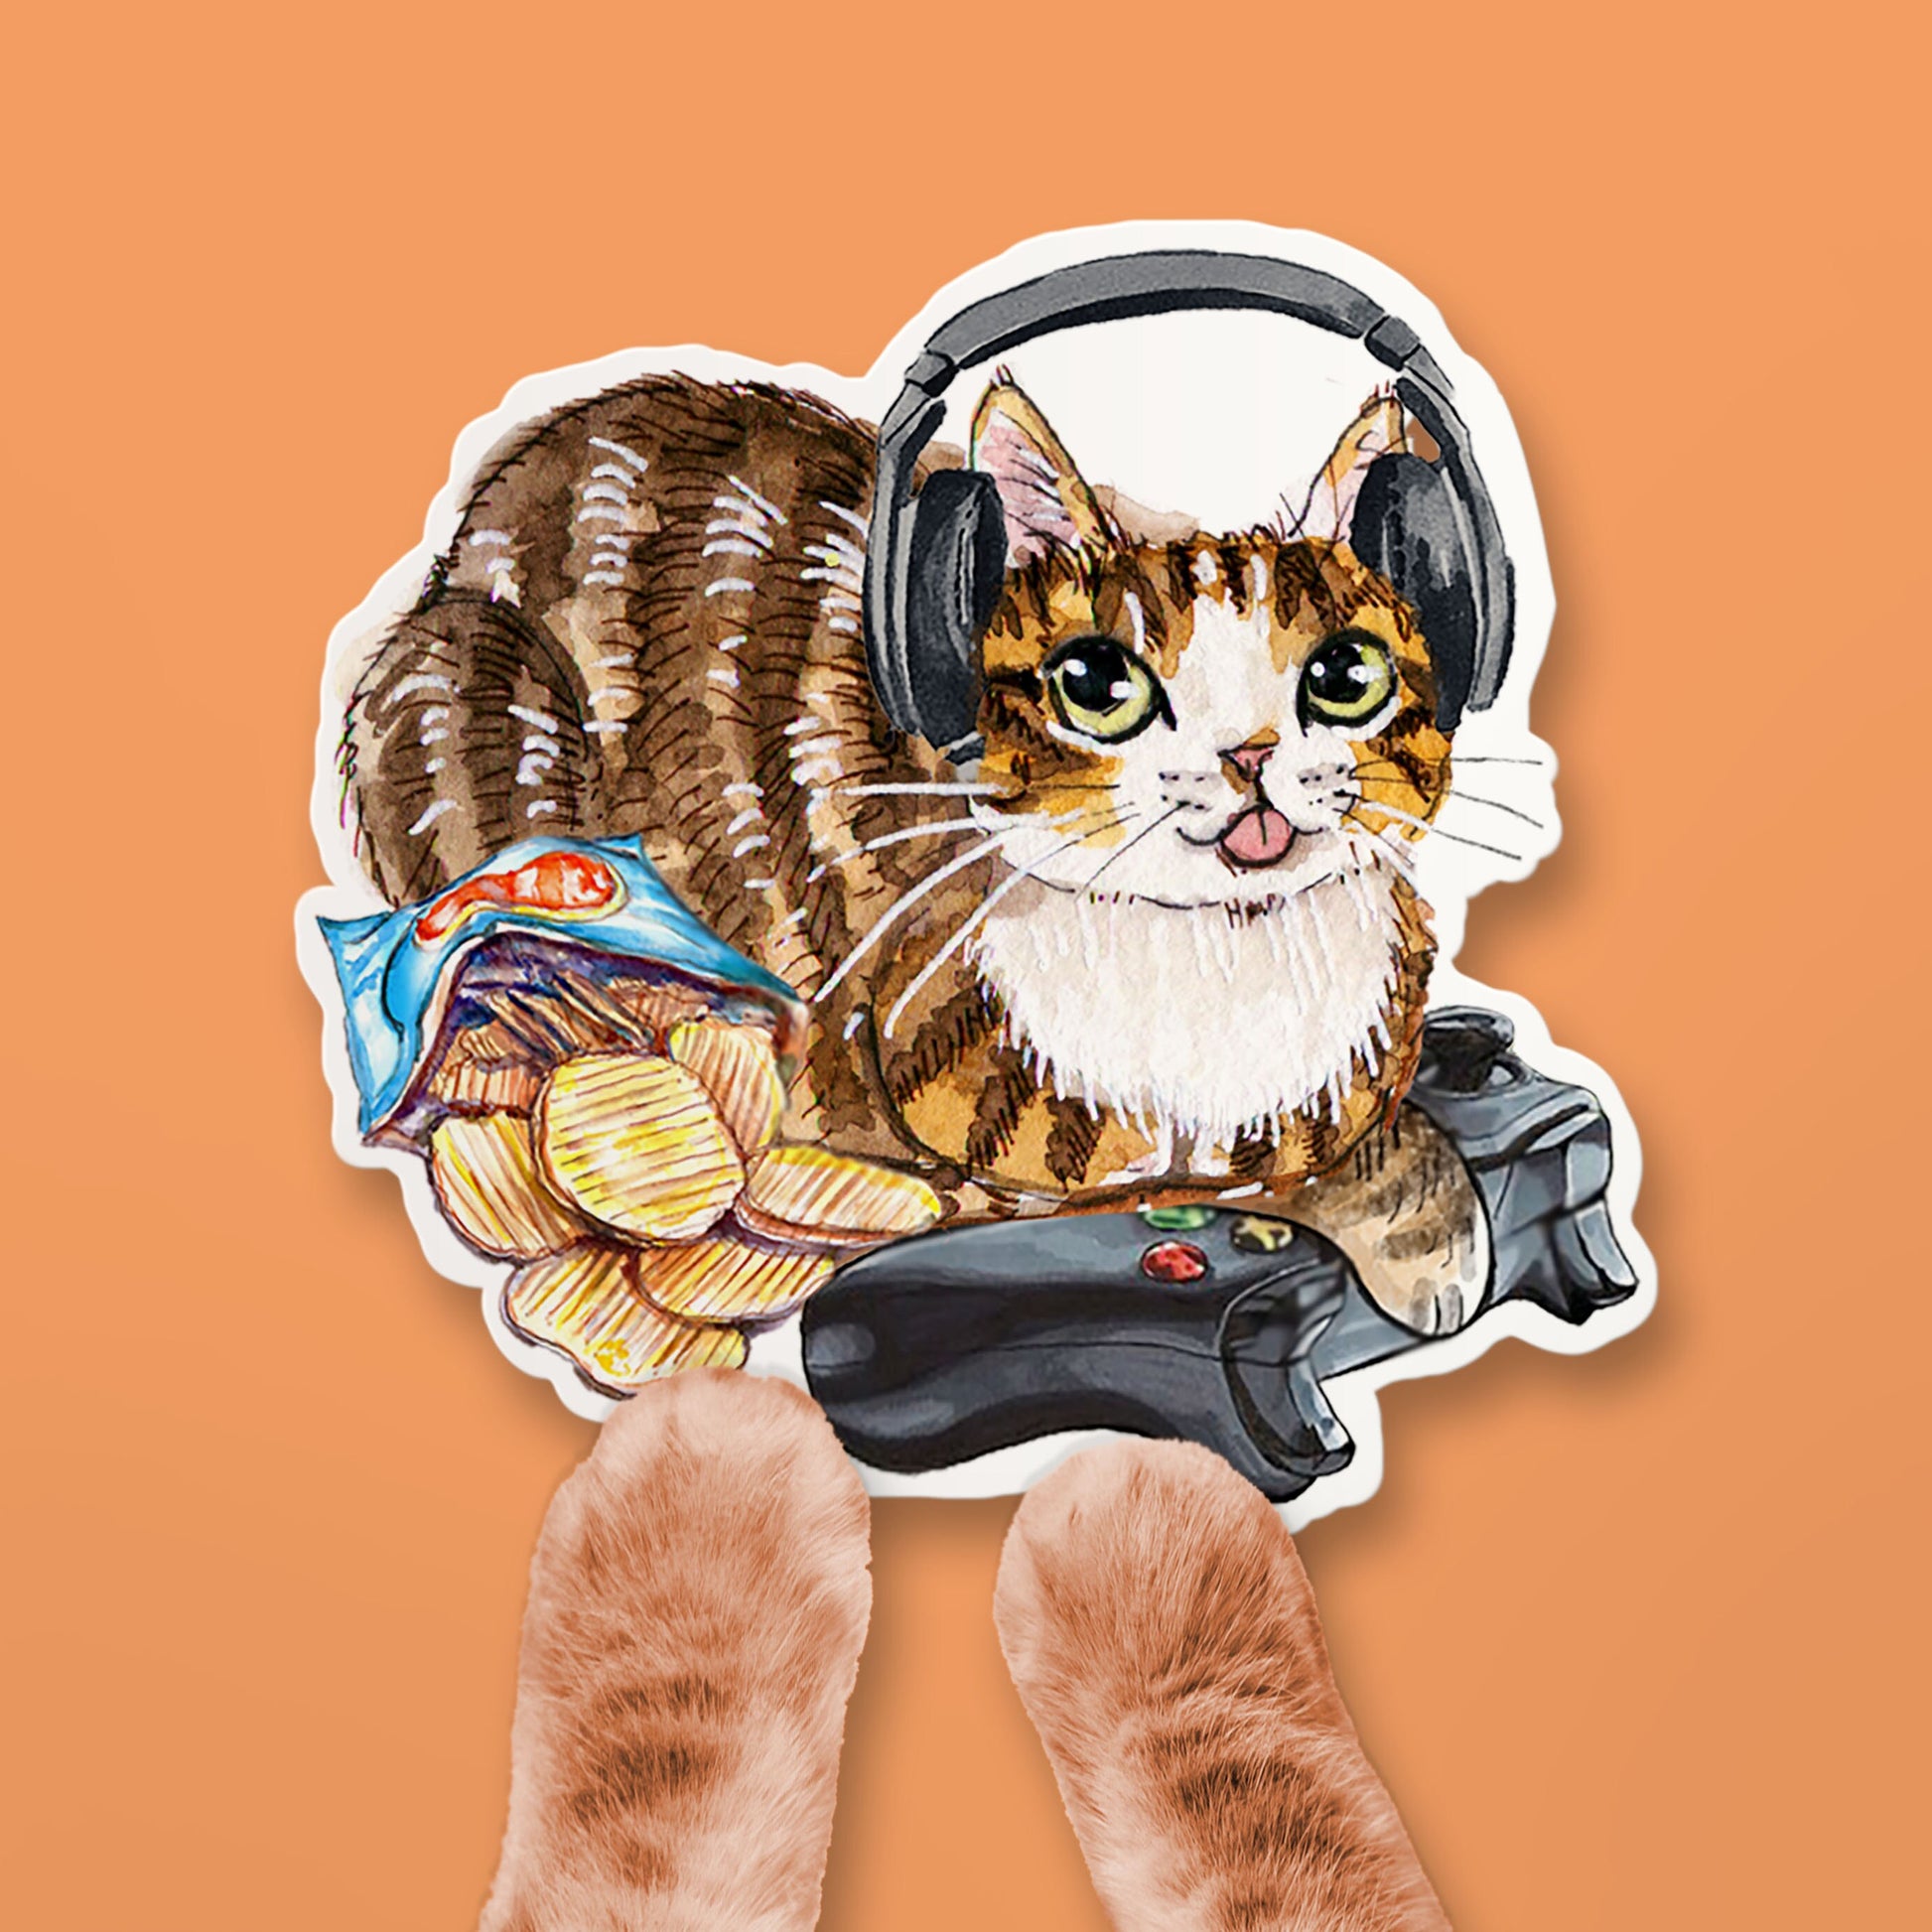 Cozy Gamer Sticker - Video Gaming Tabby Cat Sticker - Nerdy Gamer Vinyl Sticker Waterproof